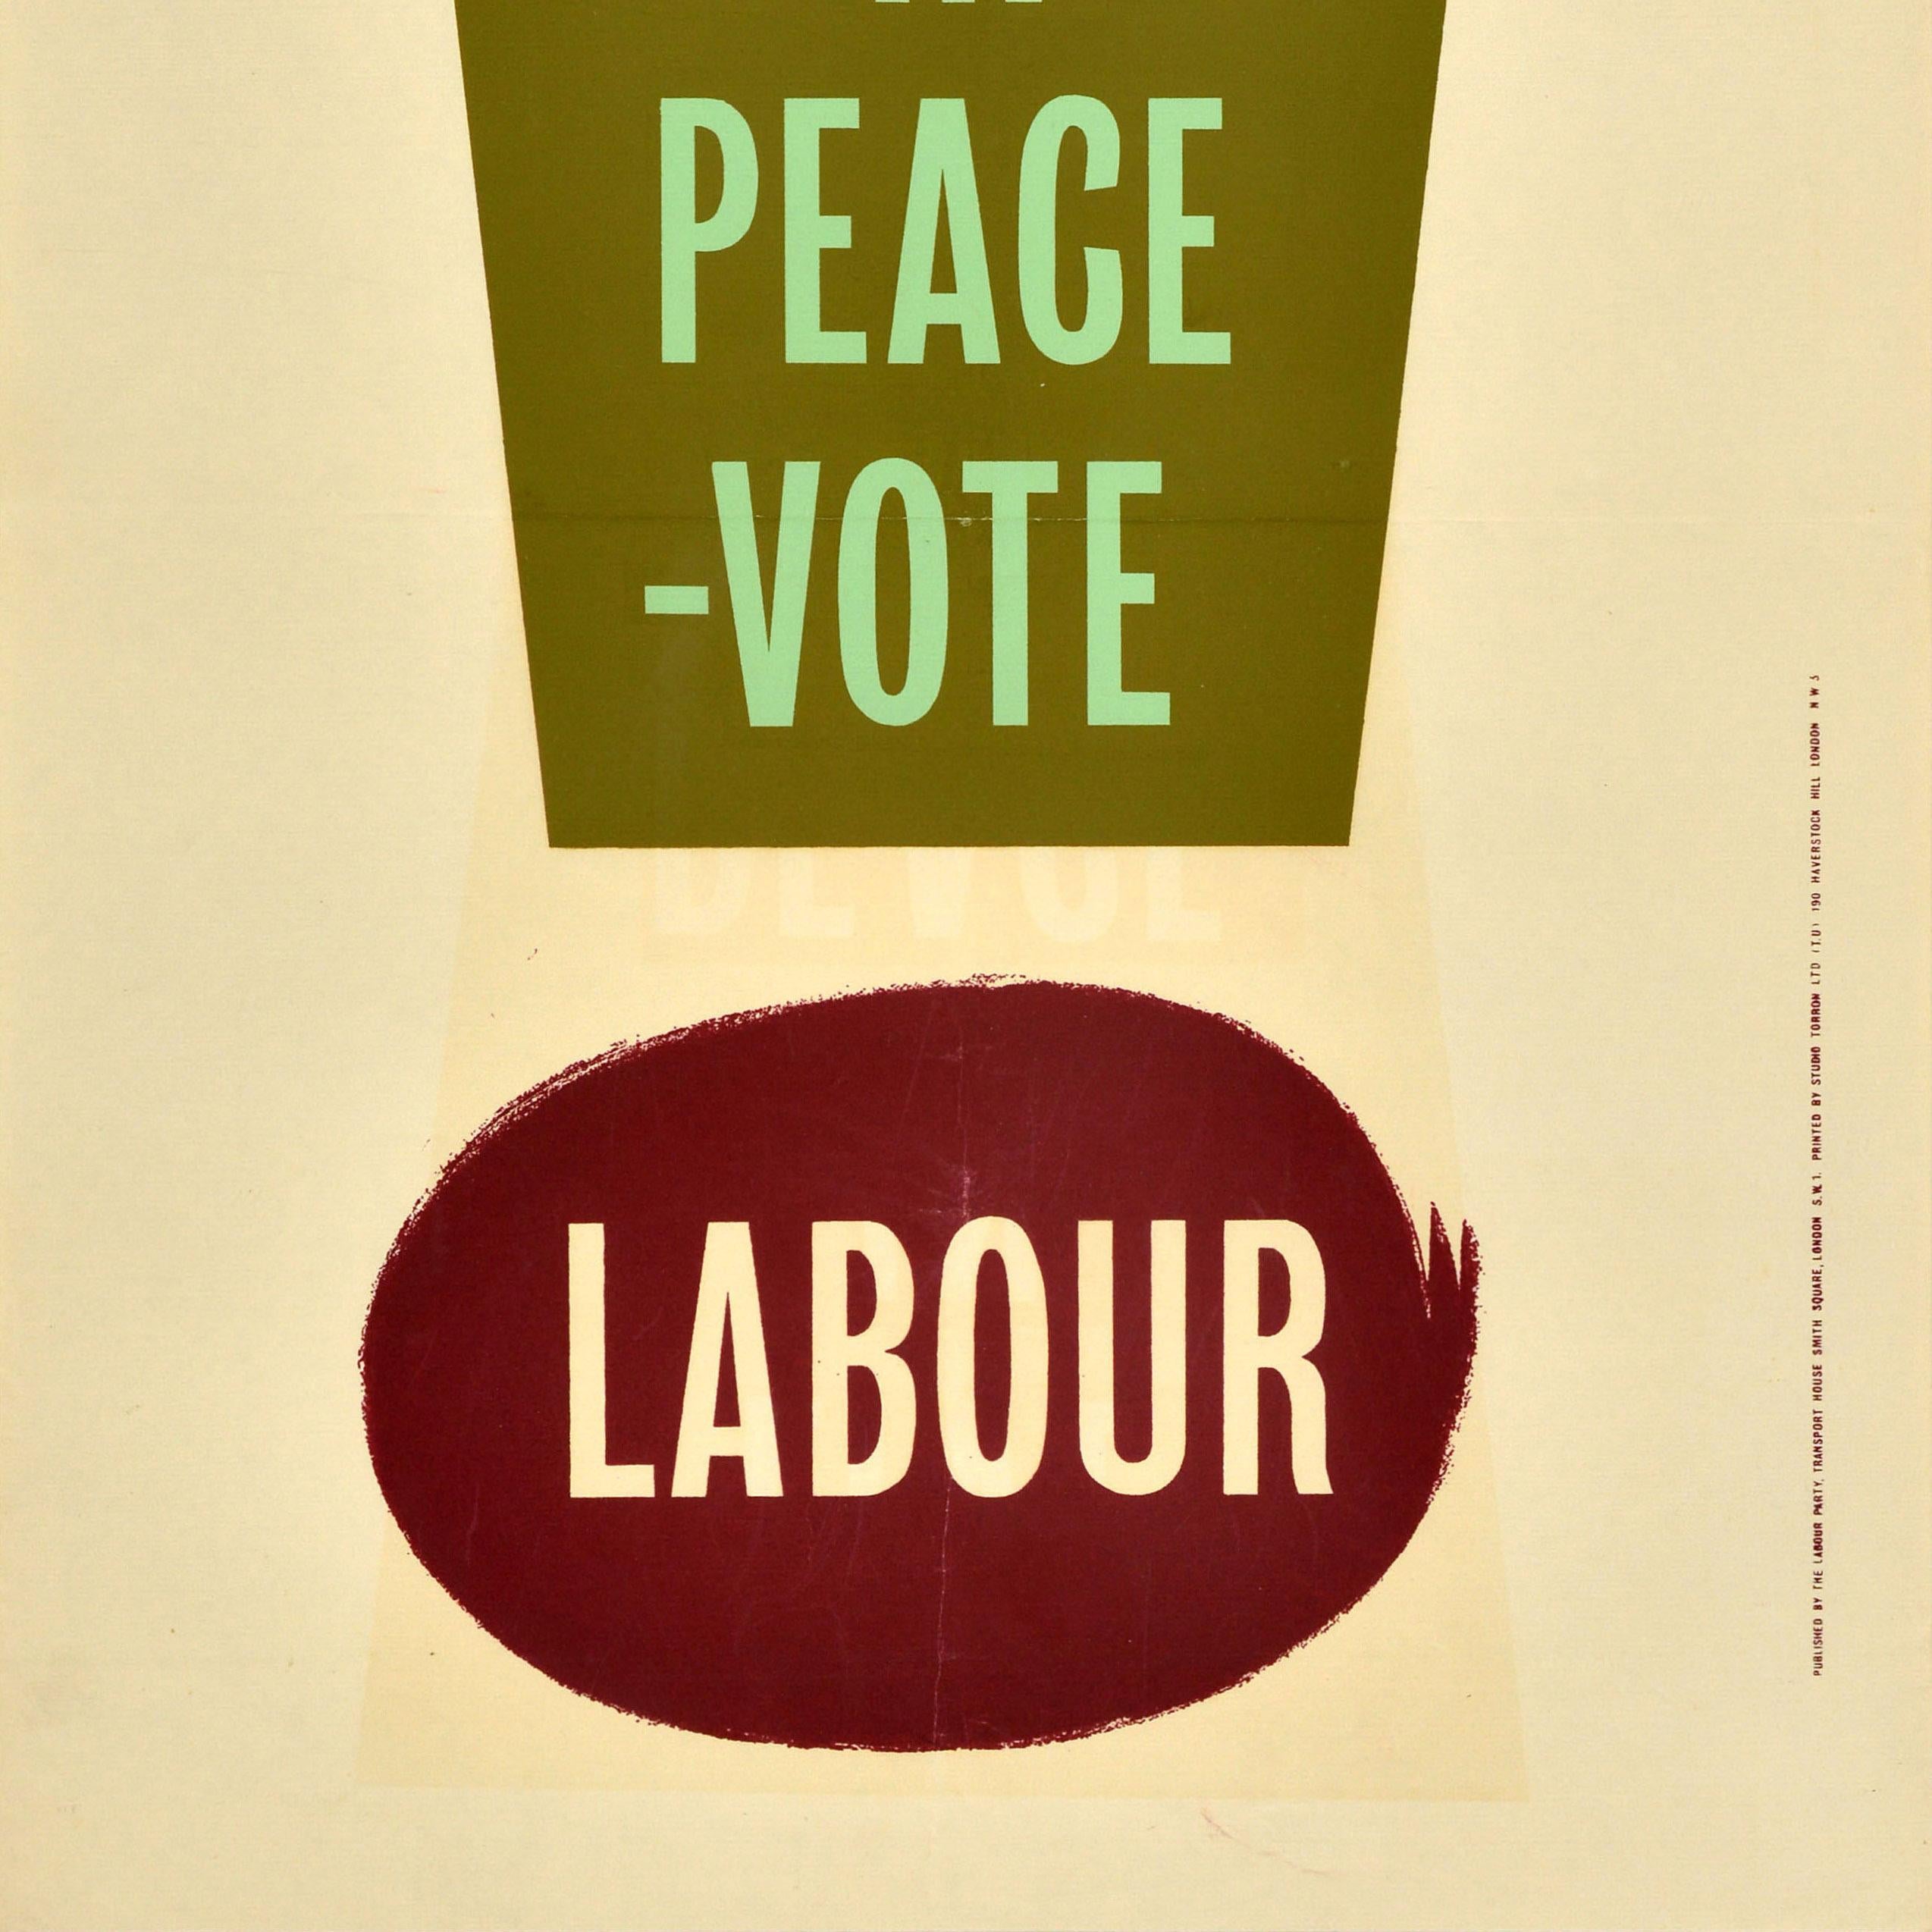 British Original Vintage Election Propaganda Poster Live In Peace Vote Labour Party UK For Sale